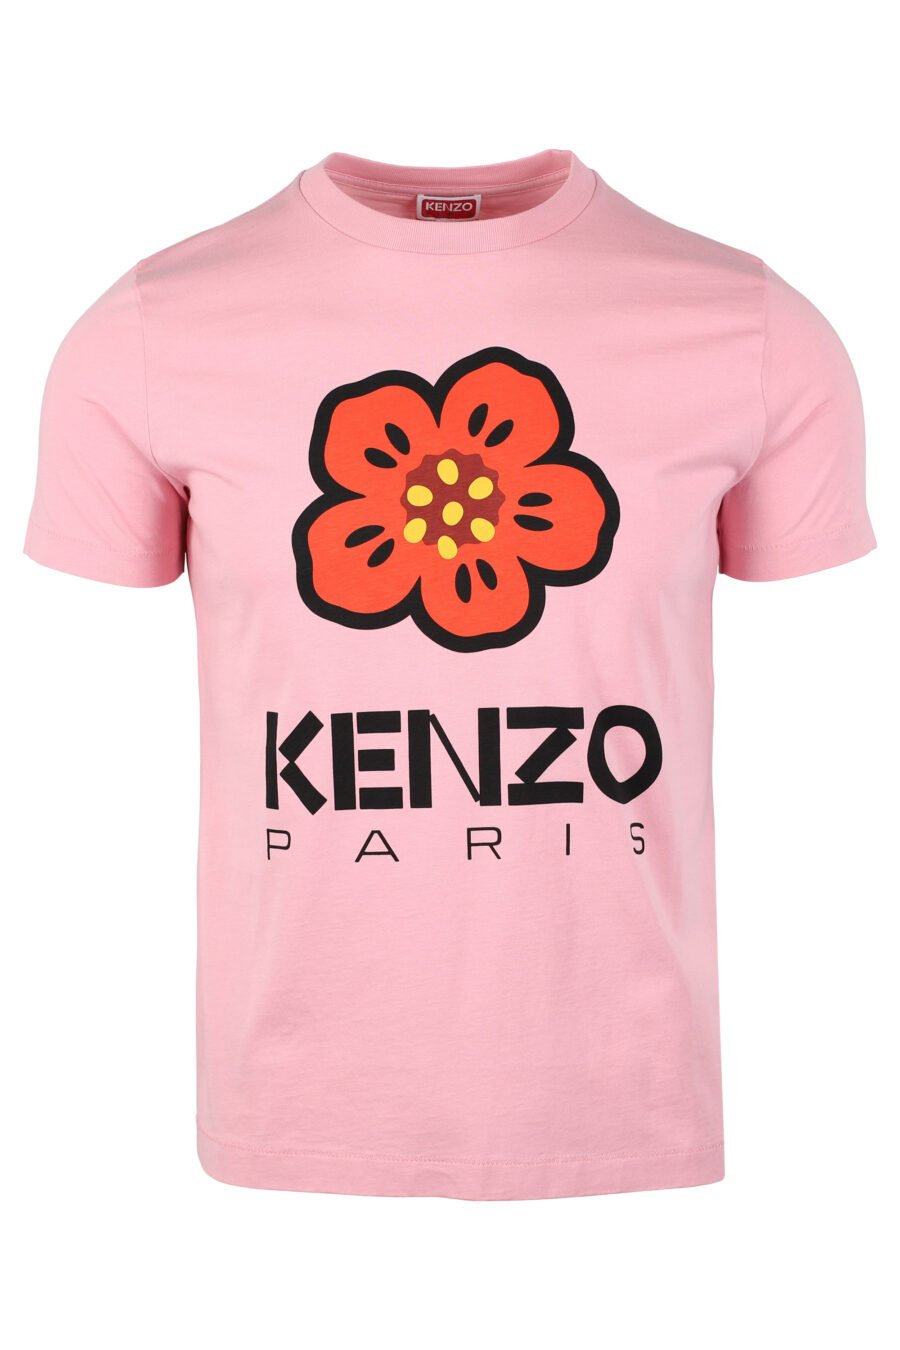 Camiseta rosa con maxilogo flor naranja - IMG 4644